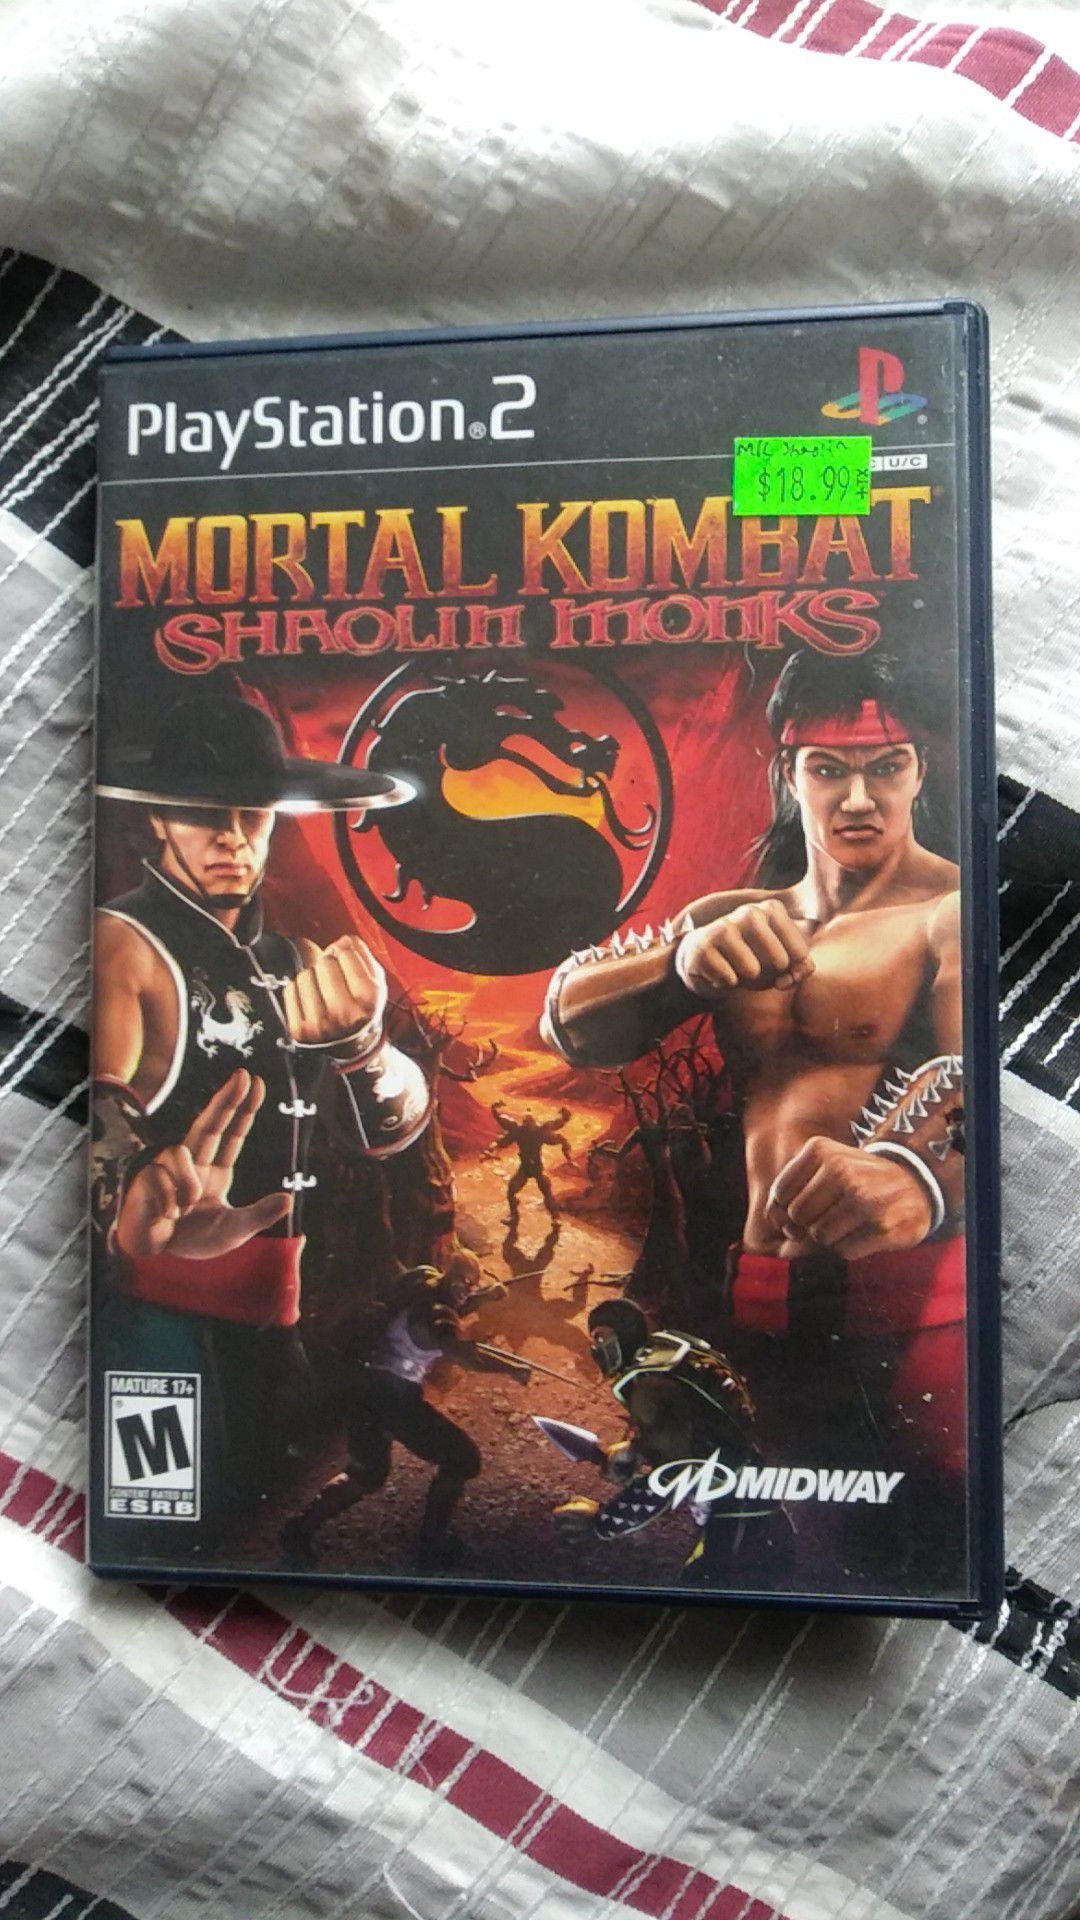 Mortal kombat shaolin monks (ps2 game)